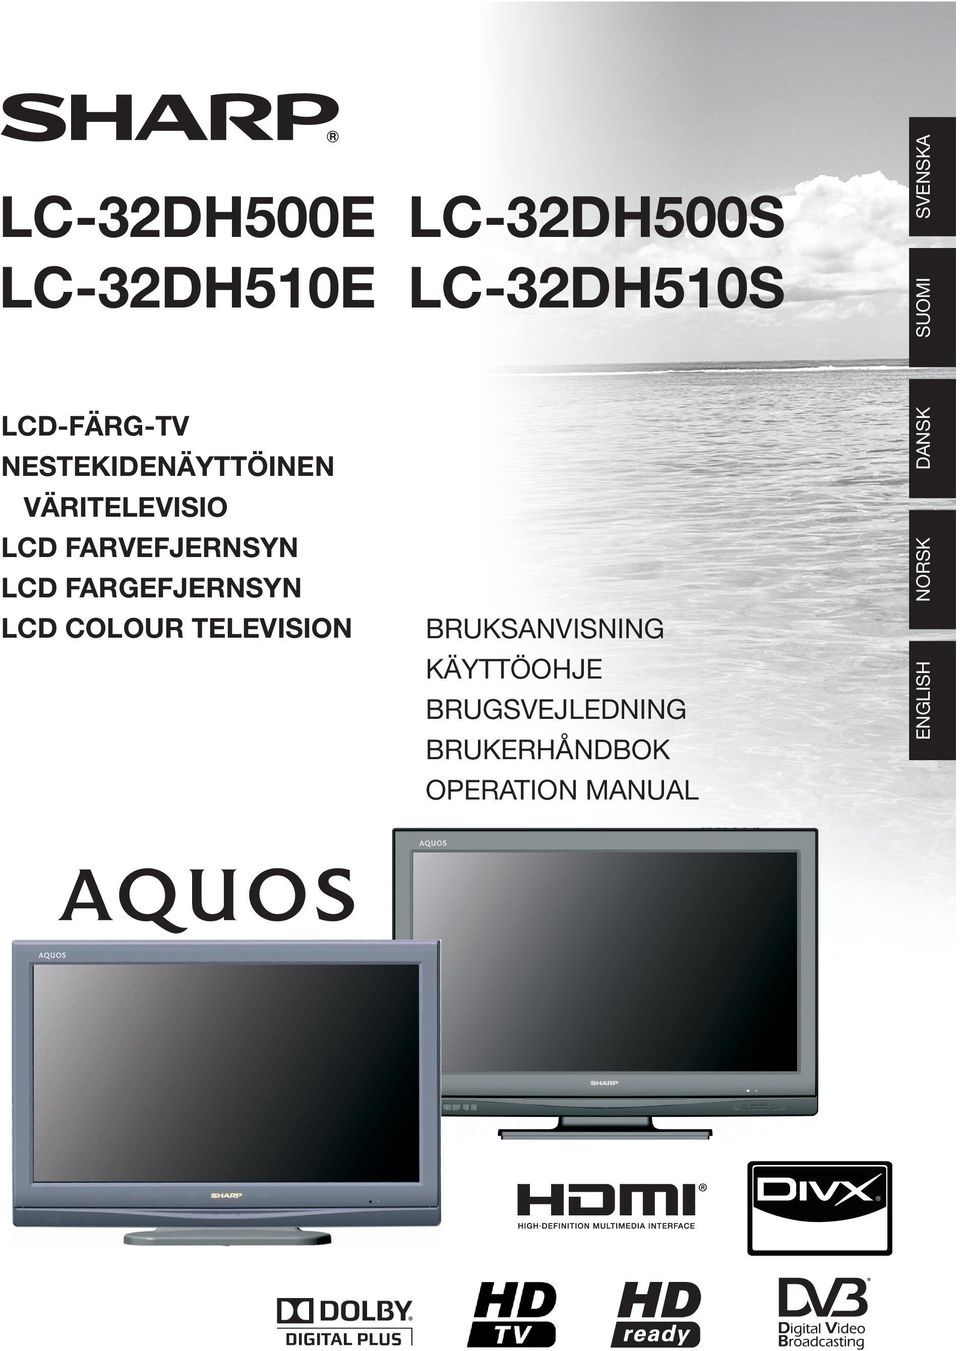 LCD FARGEFJERNSYN LCD COLOUR TELEVISION BRUKSANVISNING